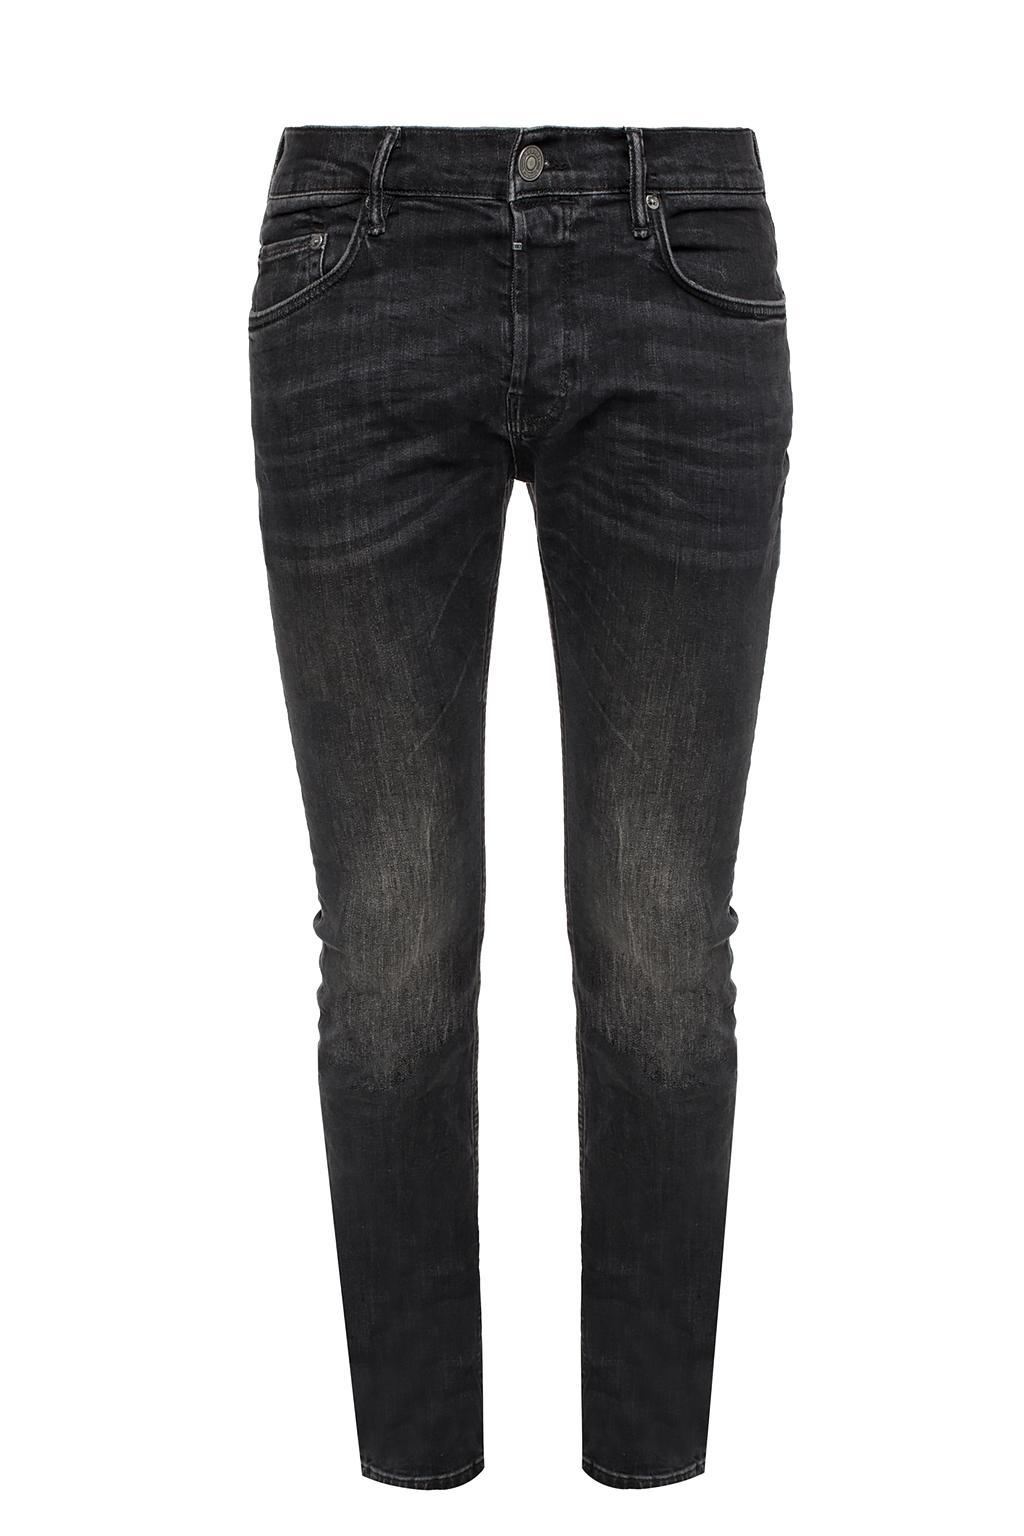 AllSaints Denim 'cigarette' Jeans in Black for Men - Lyst